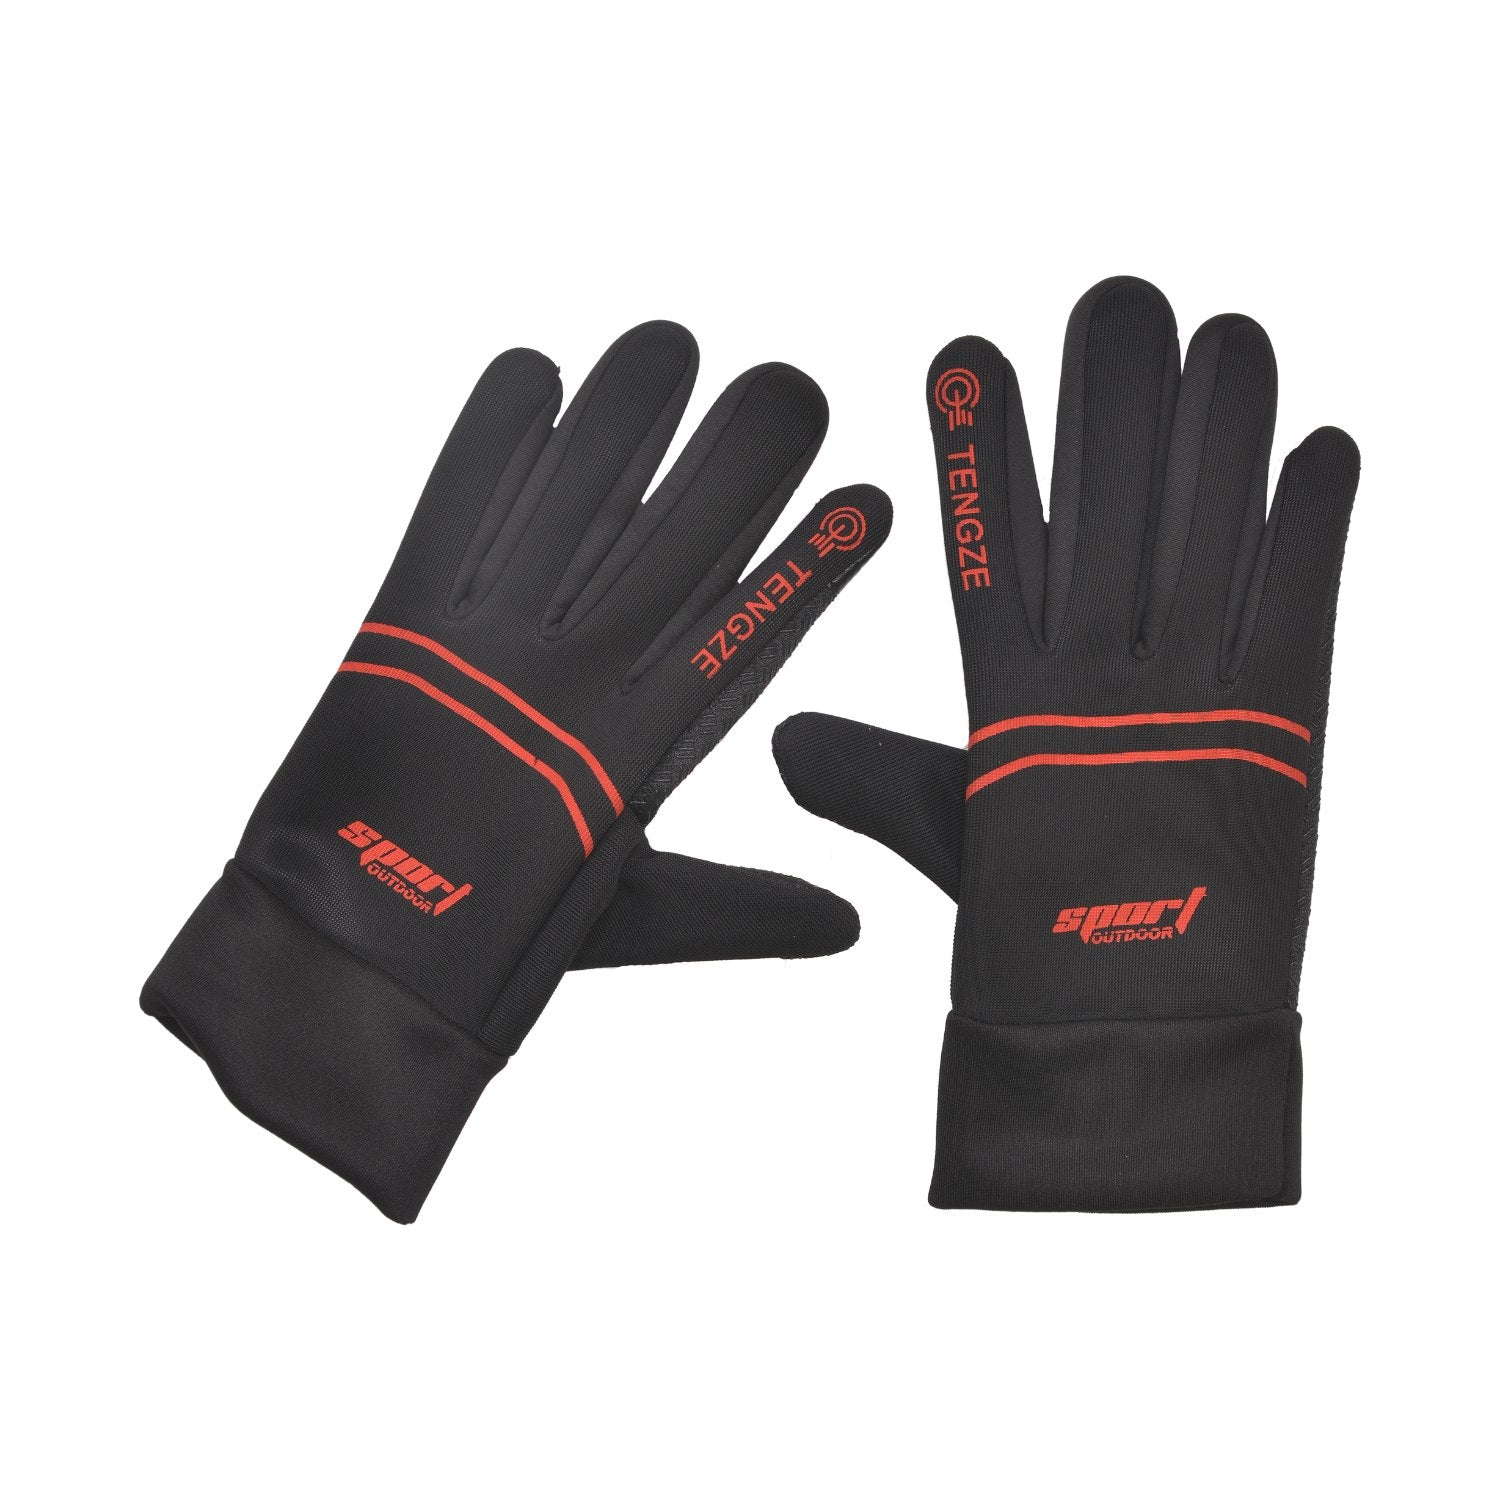 Buy Gokyo Kaza Cold Weather Windproof Gloves | Cold Weather Gloves at Gokyo Outdoor Clothing & Gear